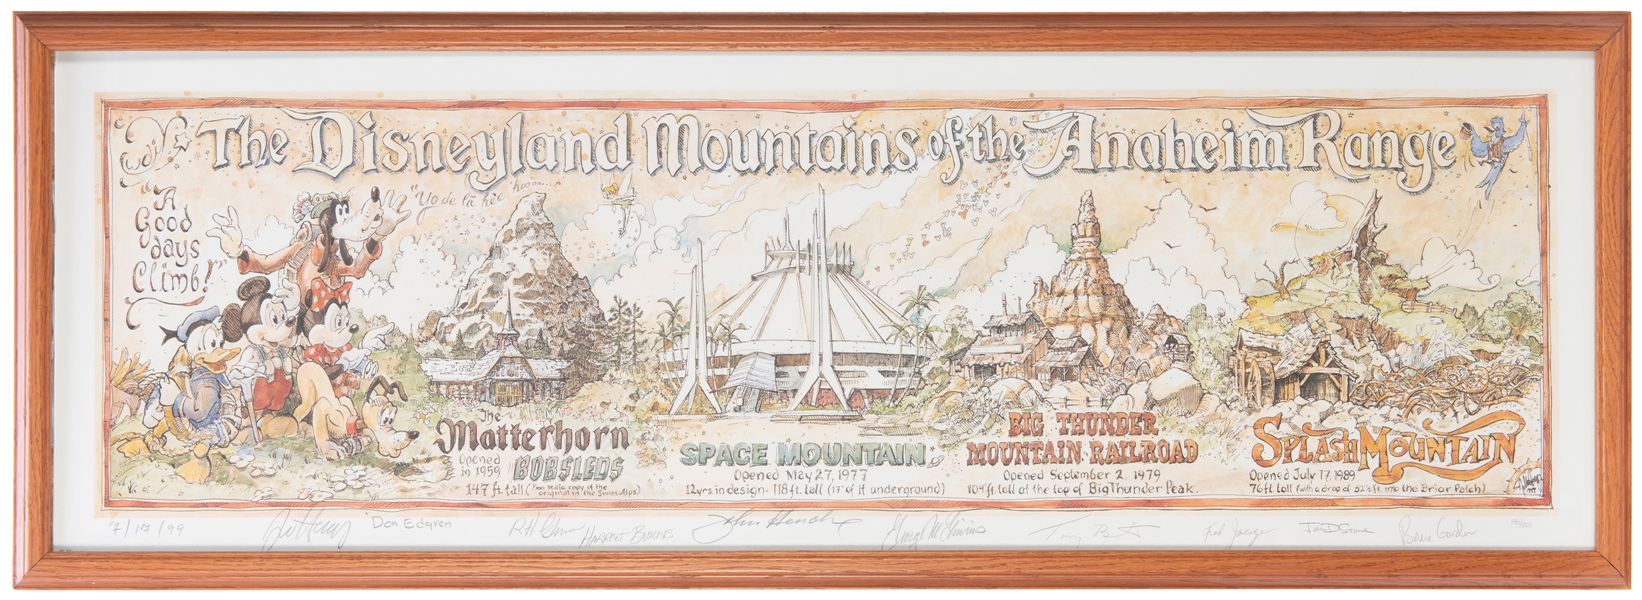  Disneyland Mountaineers of the Anaheim Range Signed Print. ...